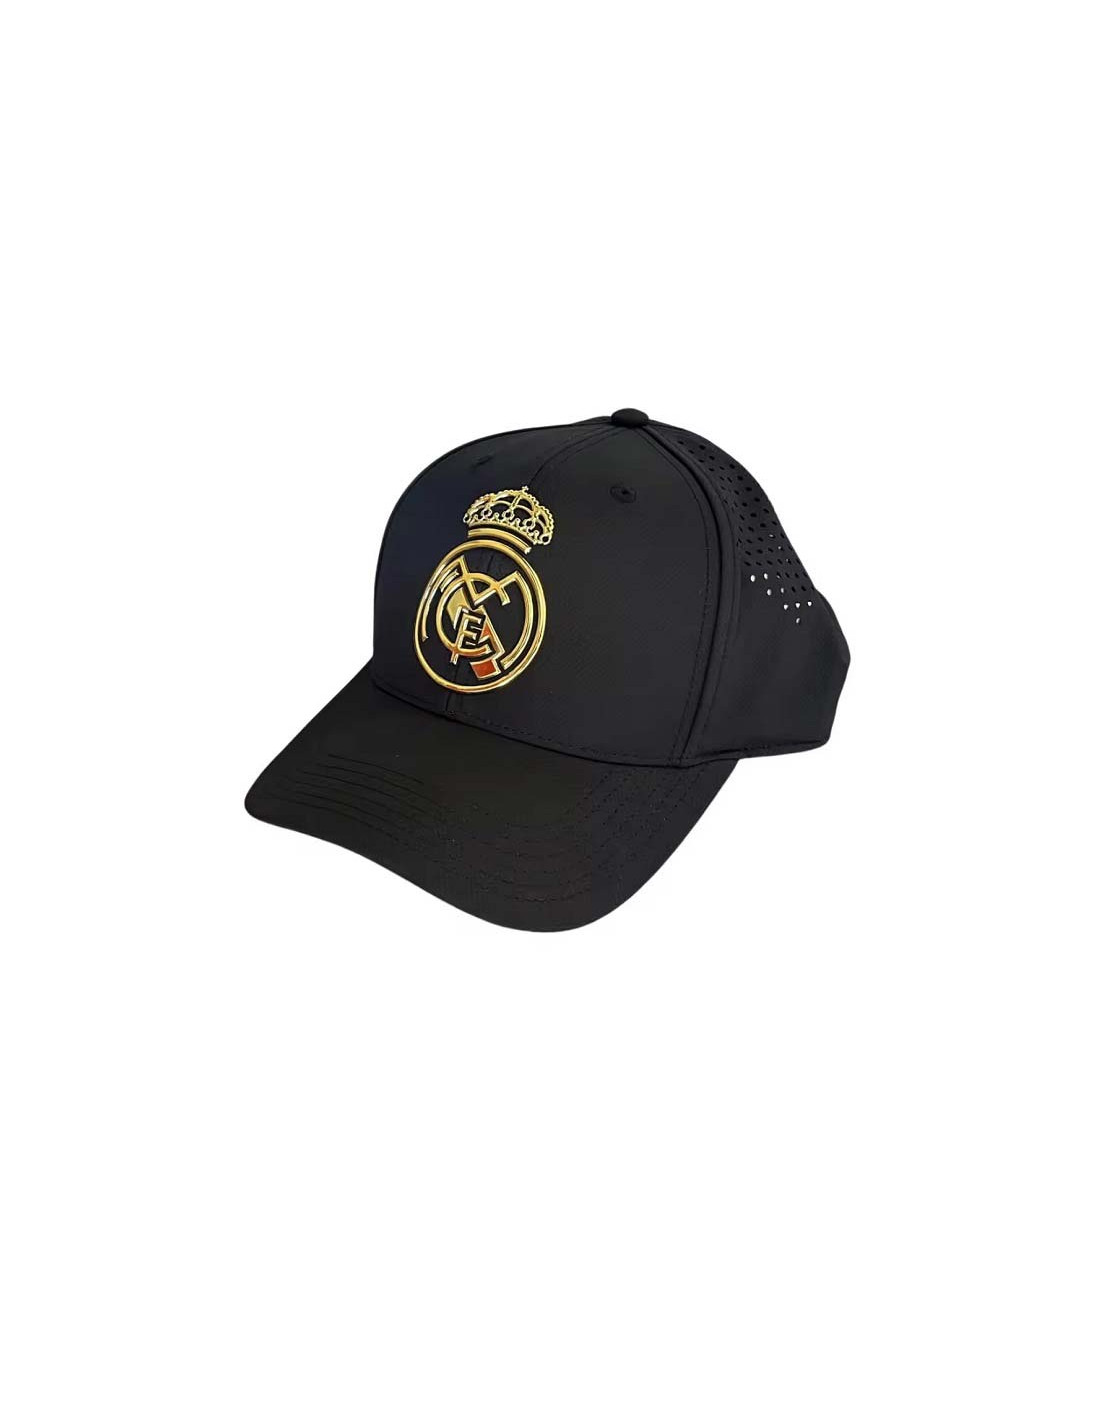 Real Madrid gorra | Adidas gorra oficial Real | Madrid Gorra oficial rejilla